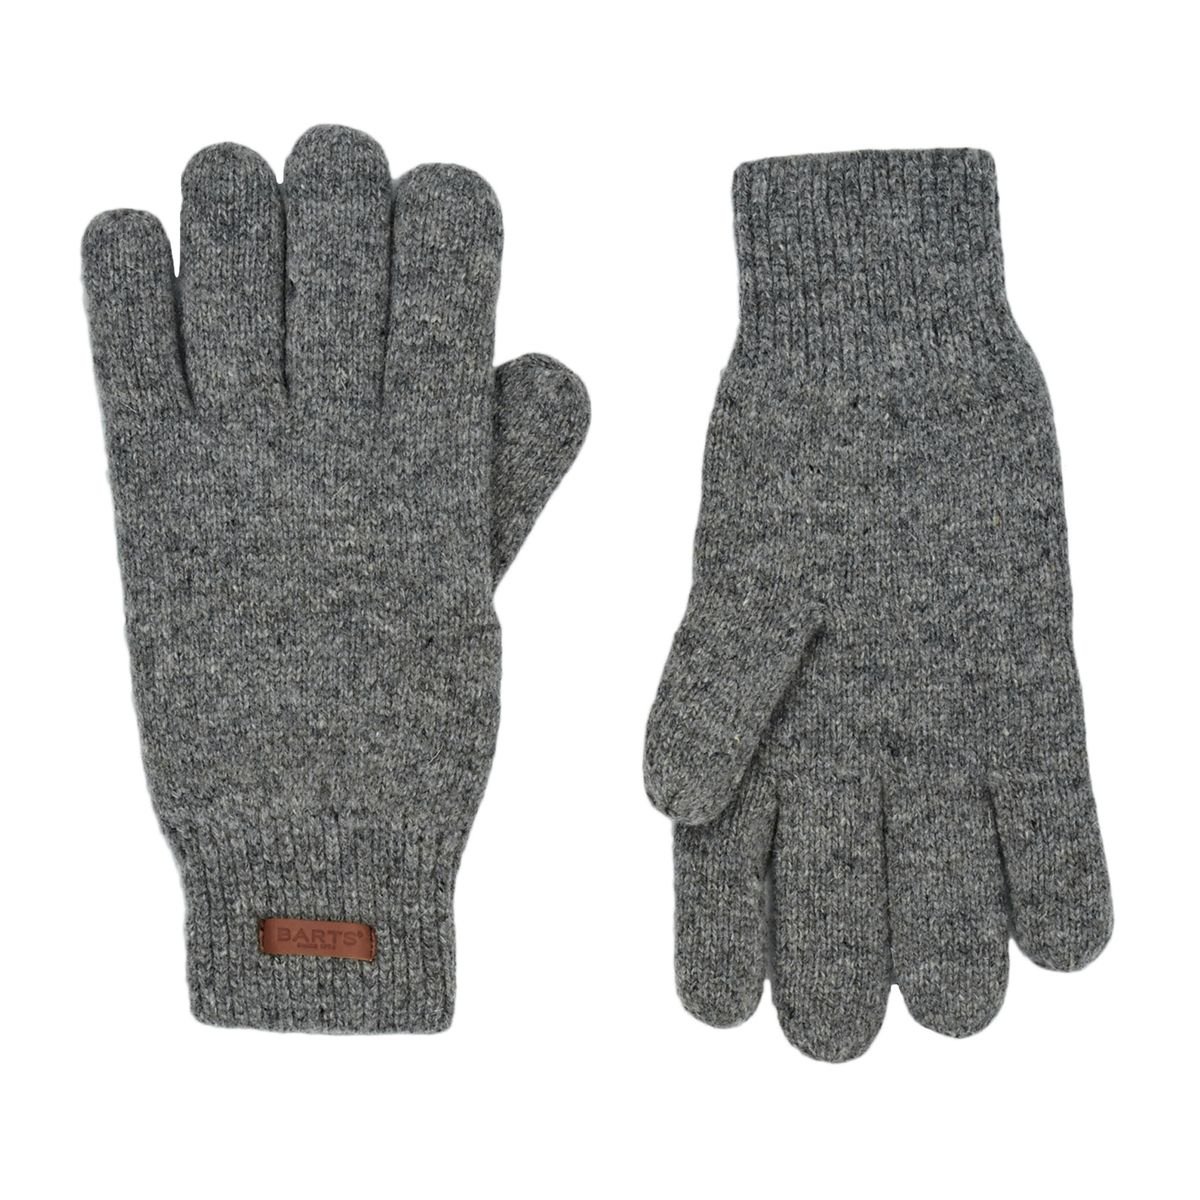 Barts Herren Handschuhe Grau (Grau) L/XL